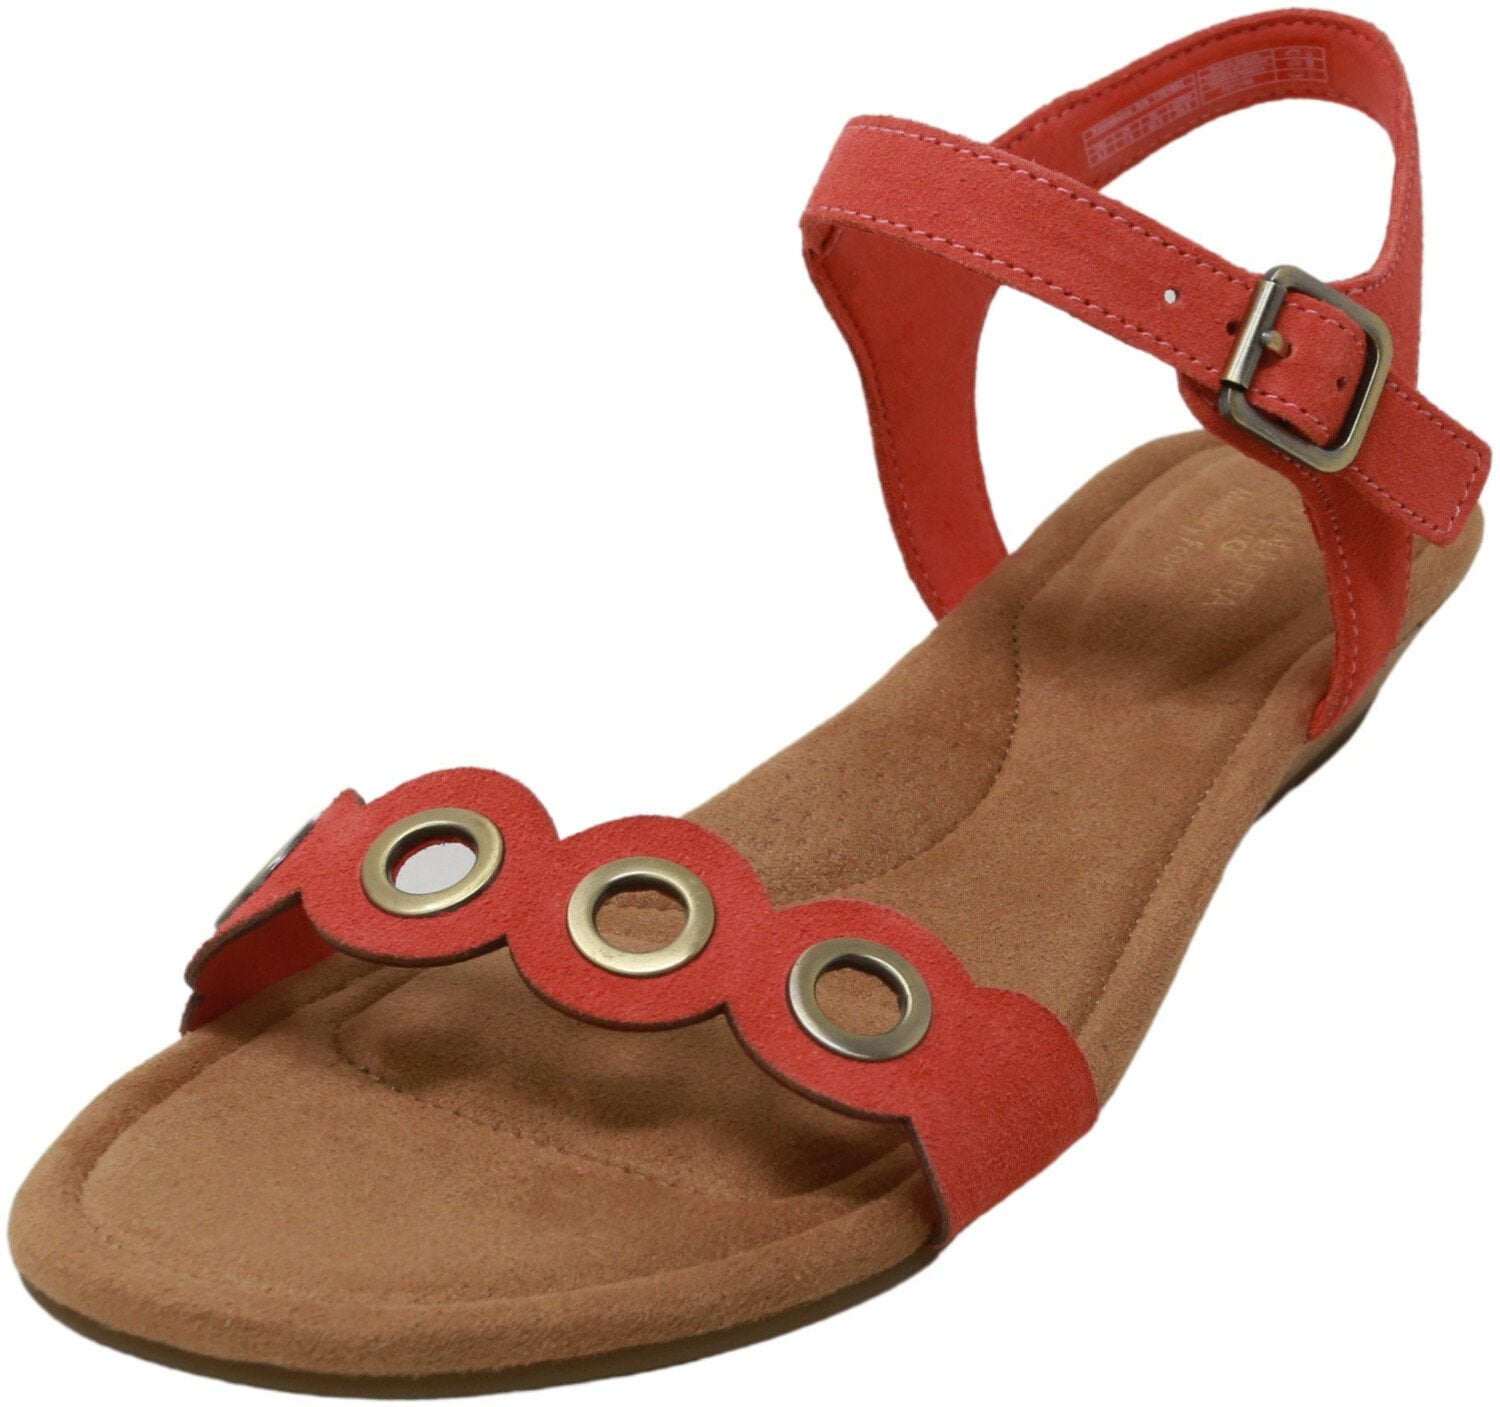 koolaburra by ugg sandals